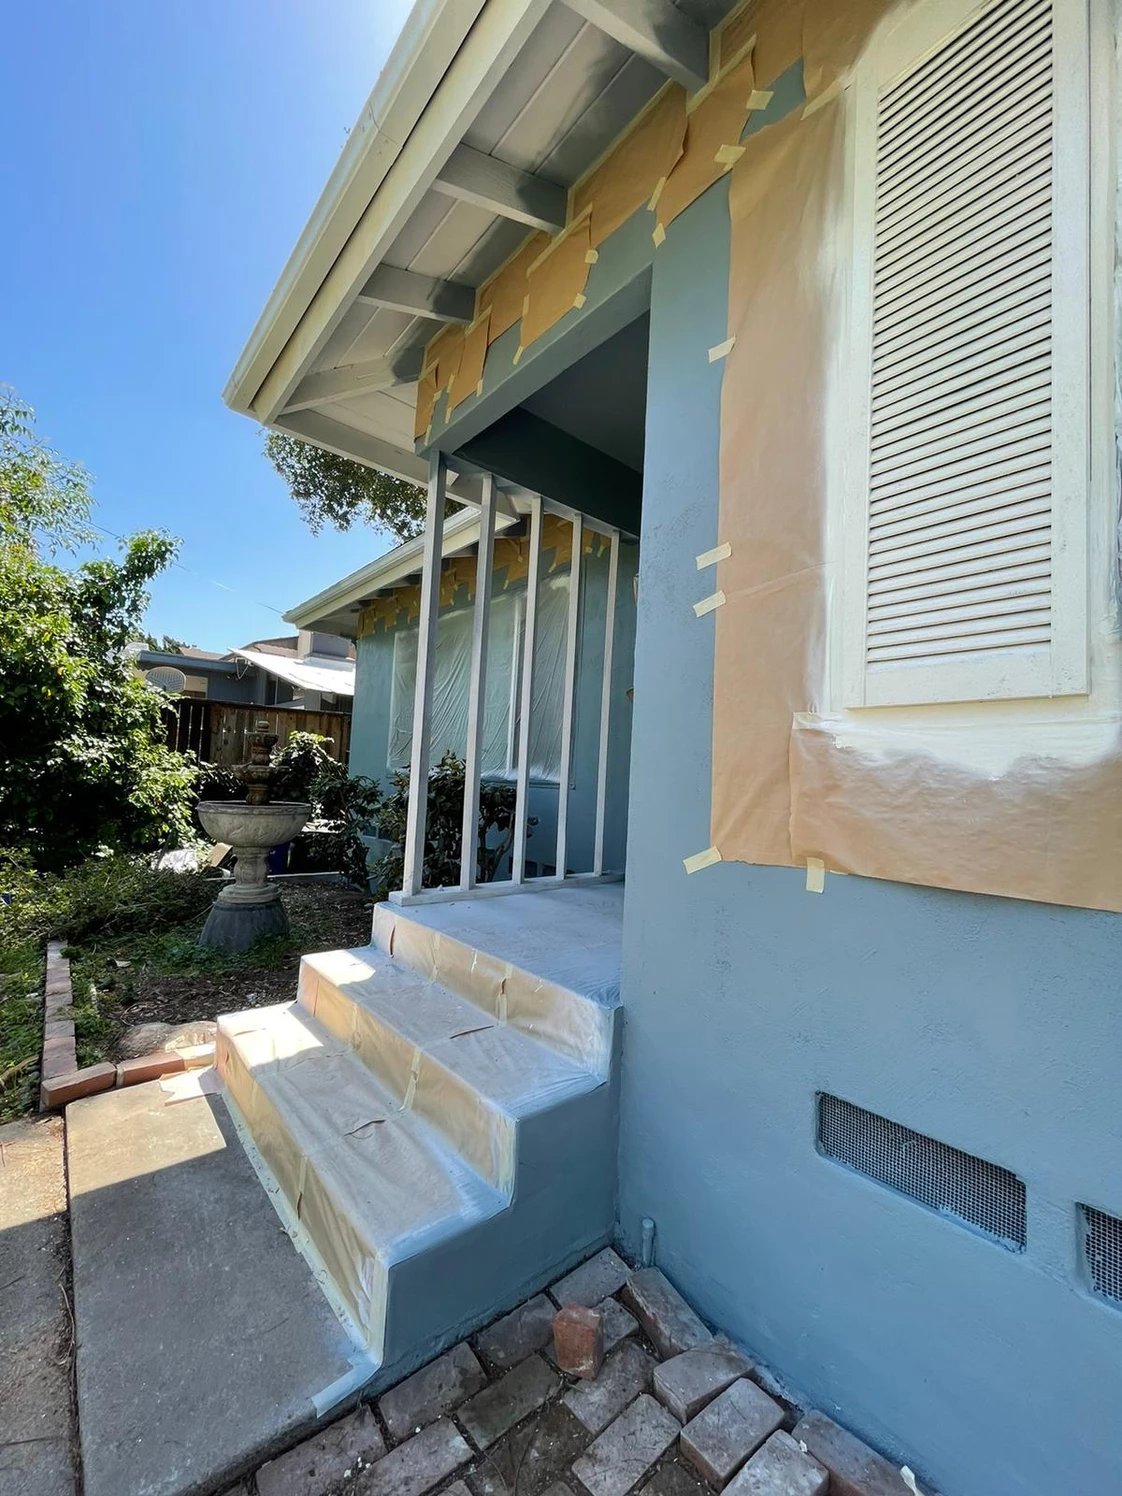 House Painting Job in La Mesa (1)